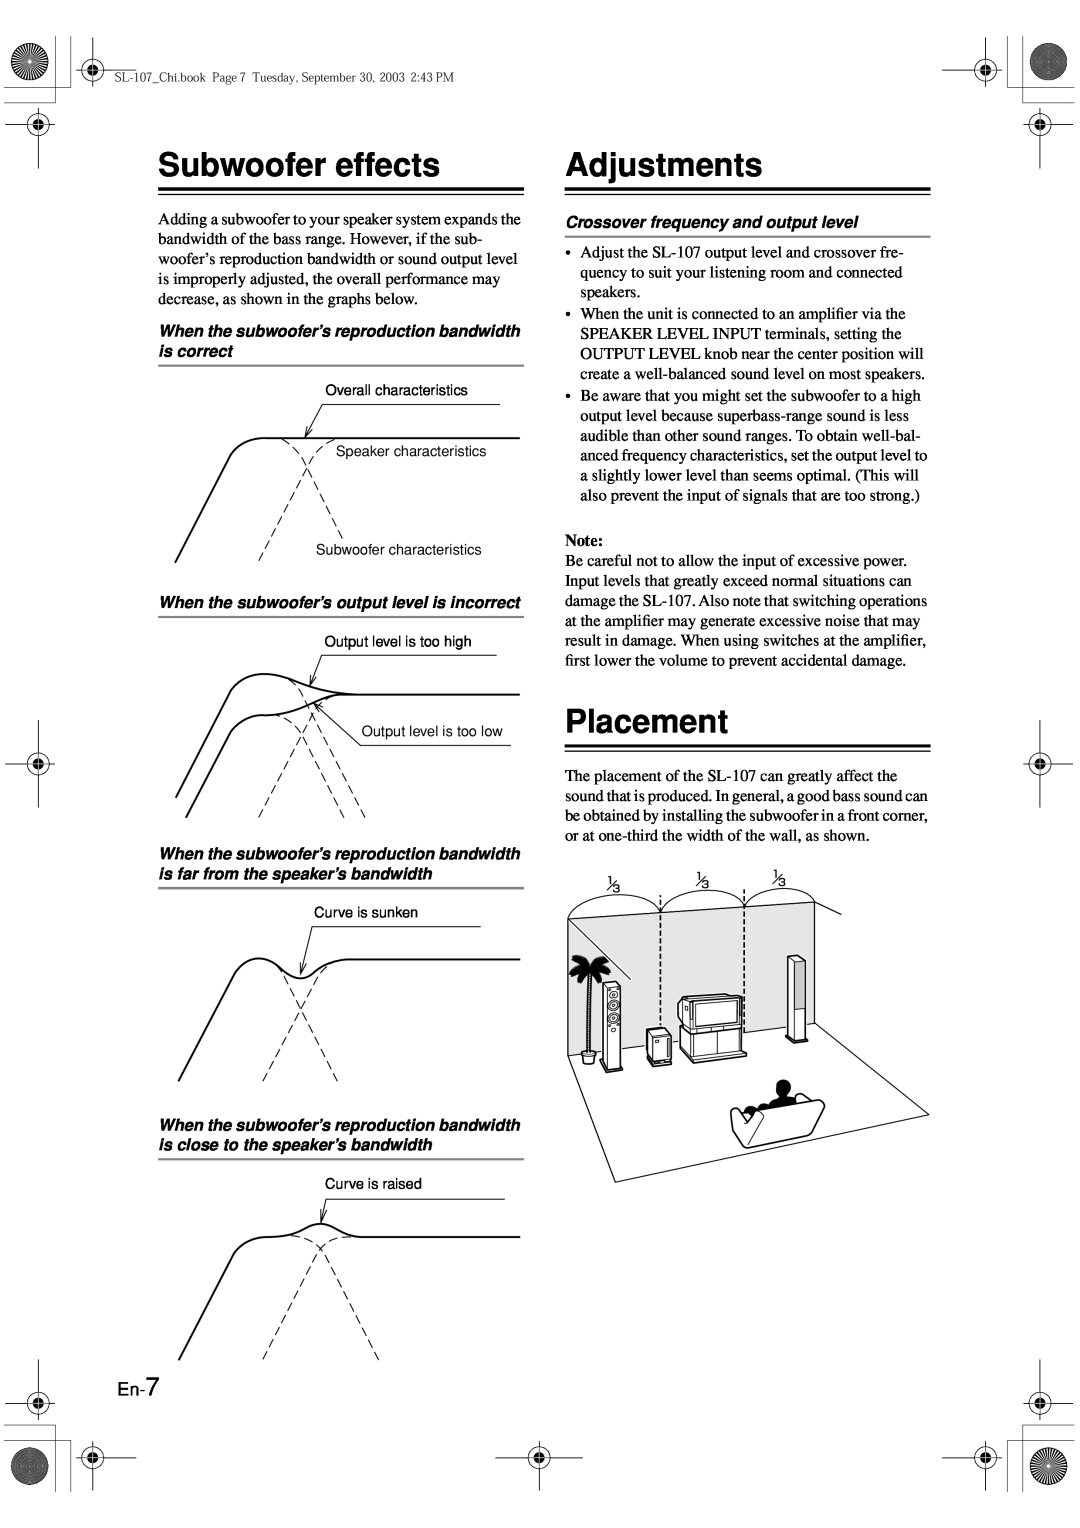 Onkyo SL-107 instruction manual Subwoofer effects, Adjustments, Placement, En-7 